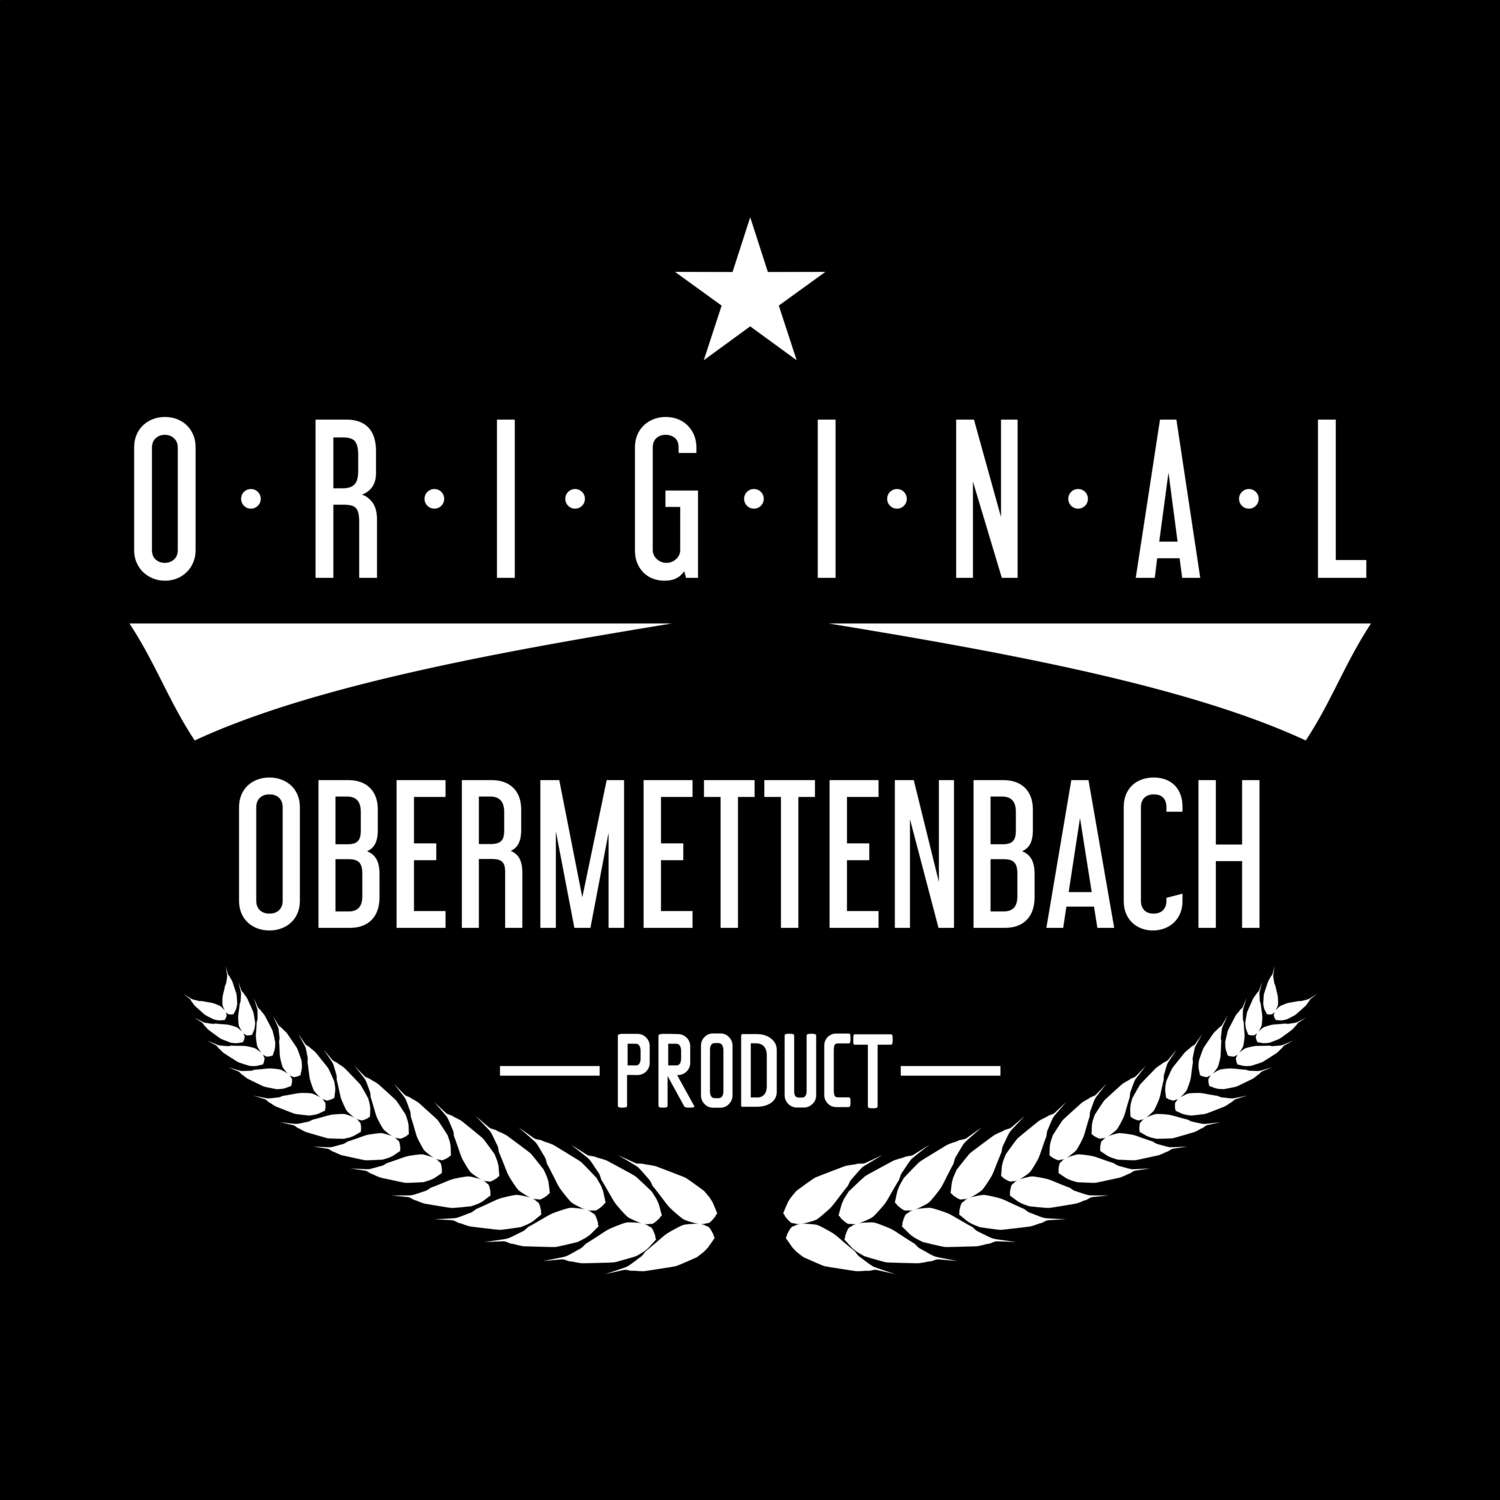 Obermettenbach T-Shirt »Original Product«